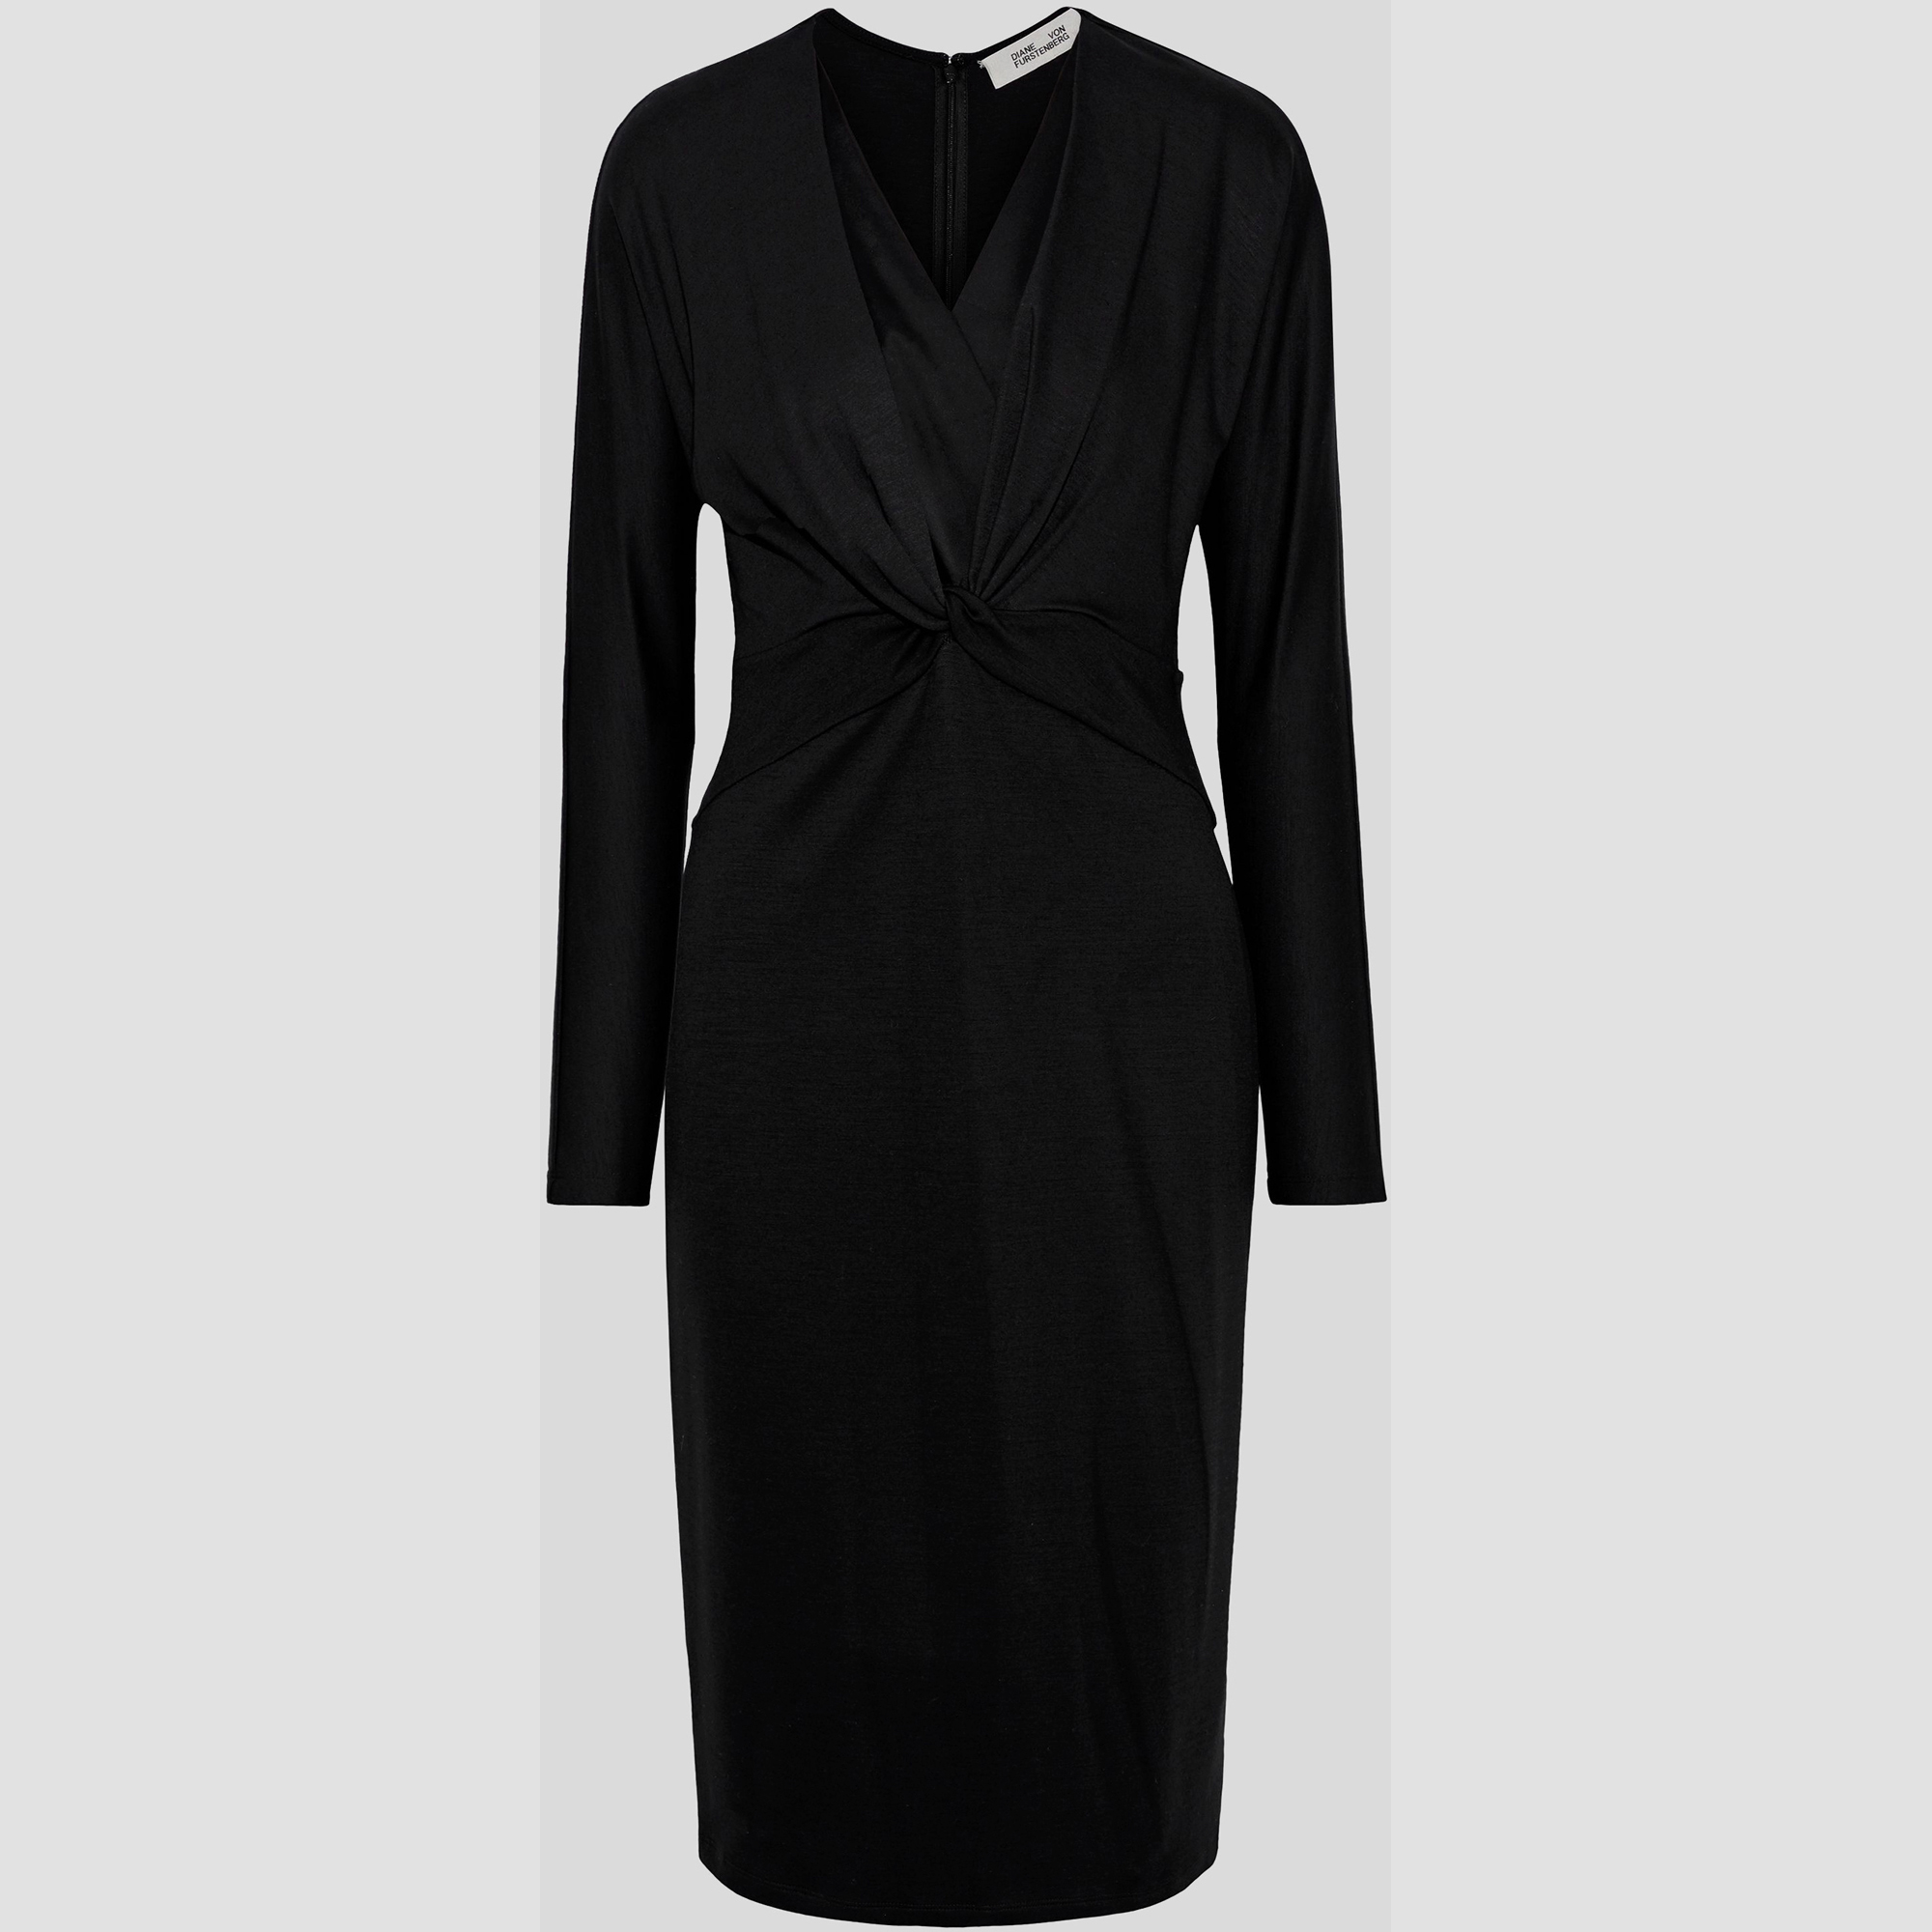 Diane von furstenberg virgin wool knee length dress xs